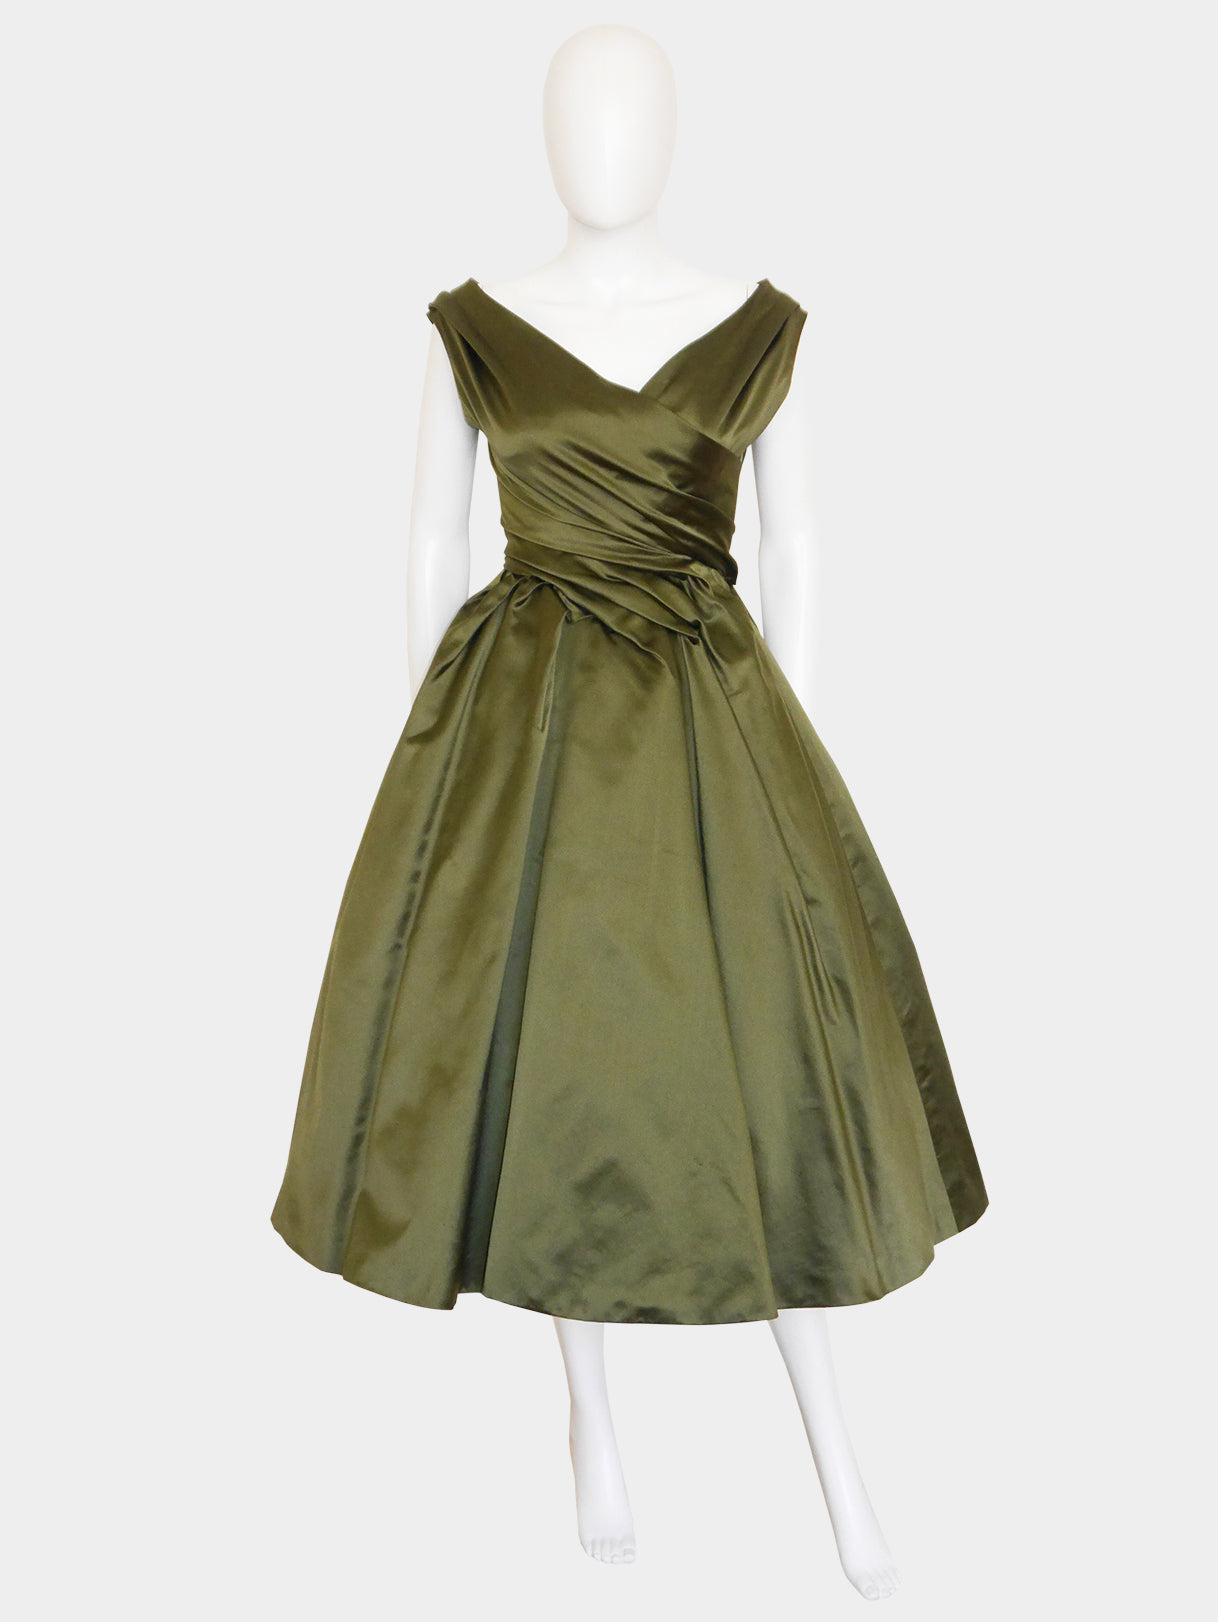 CHRISTIAN DIOR Fall 1957 Haute Couture 